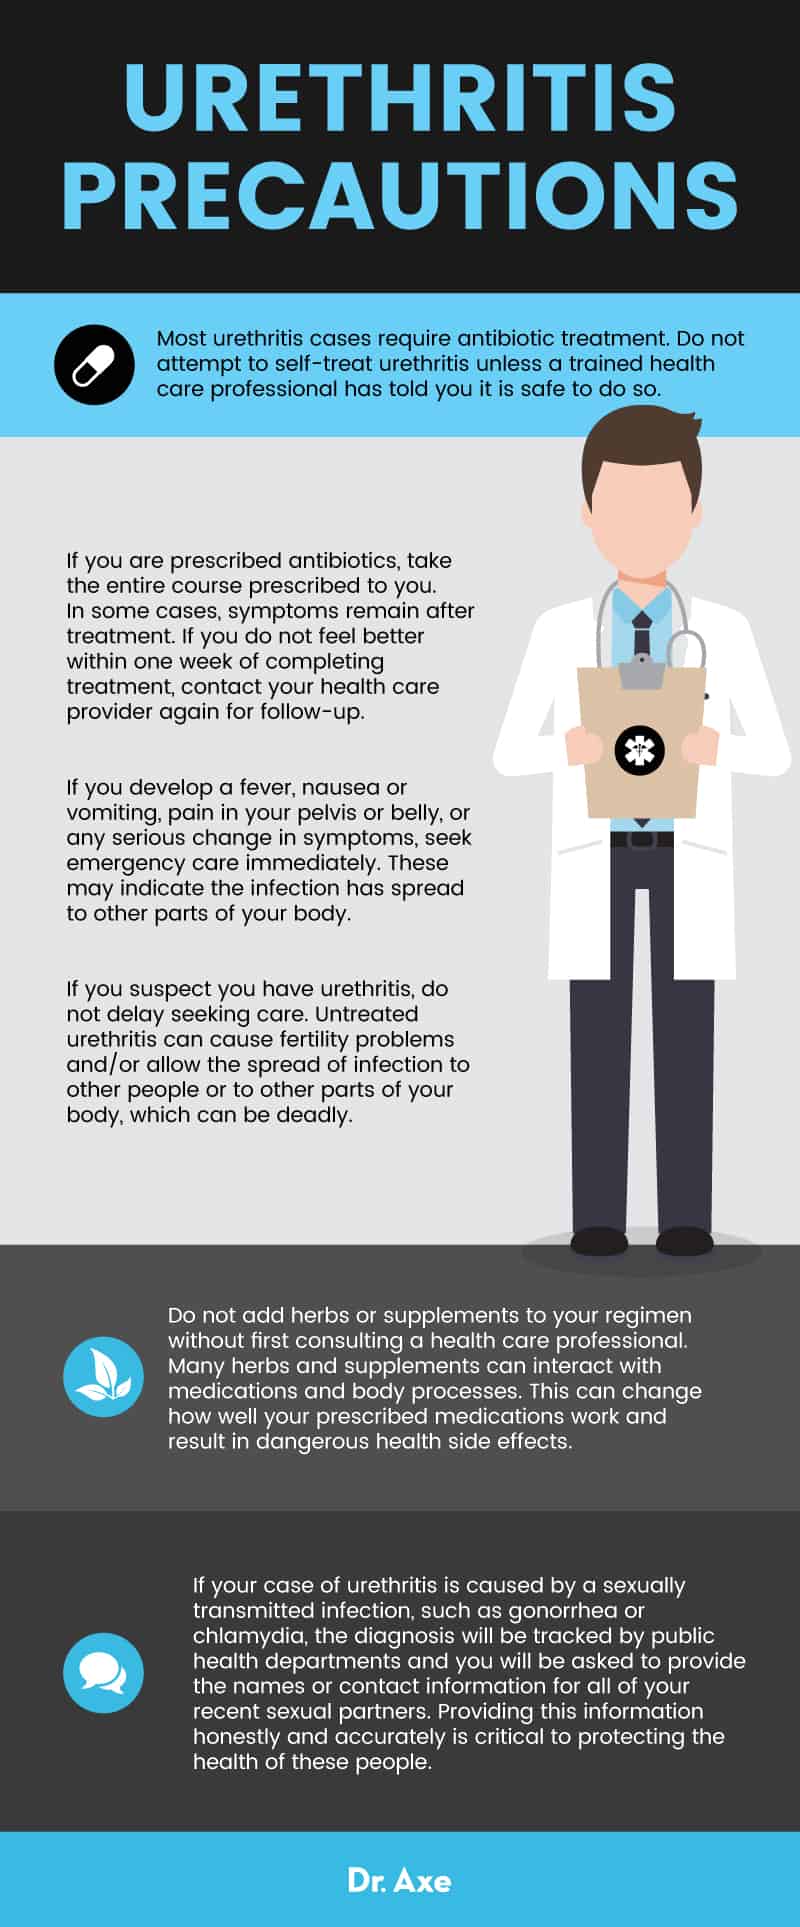 Urethritis precautions - Dr. Axe